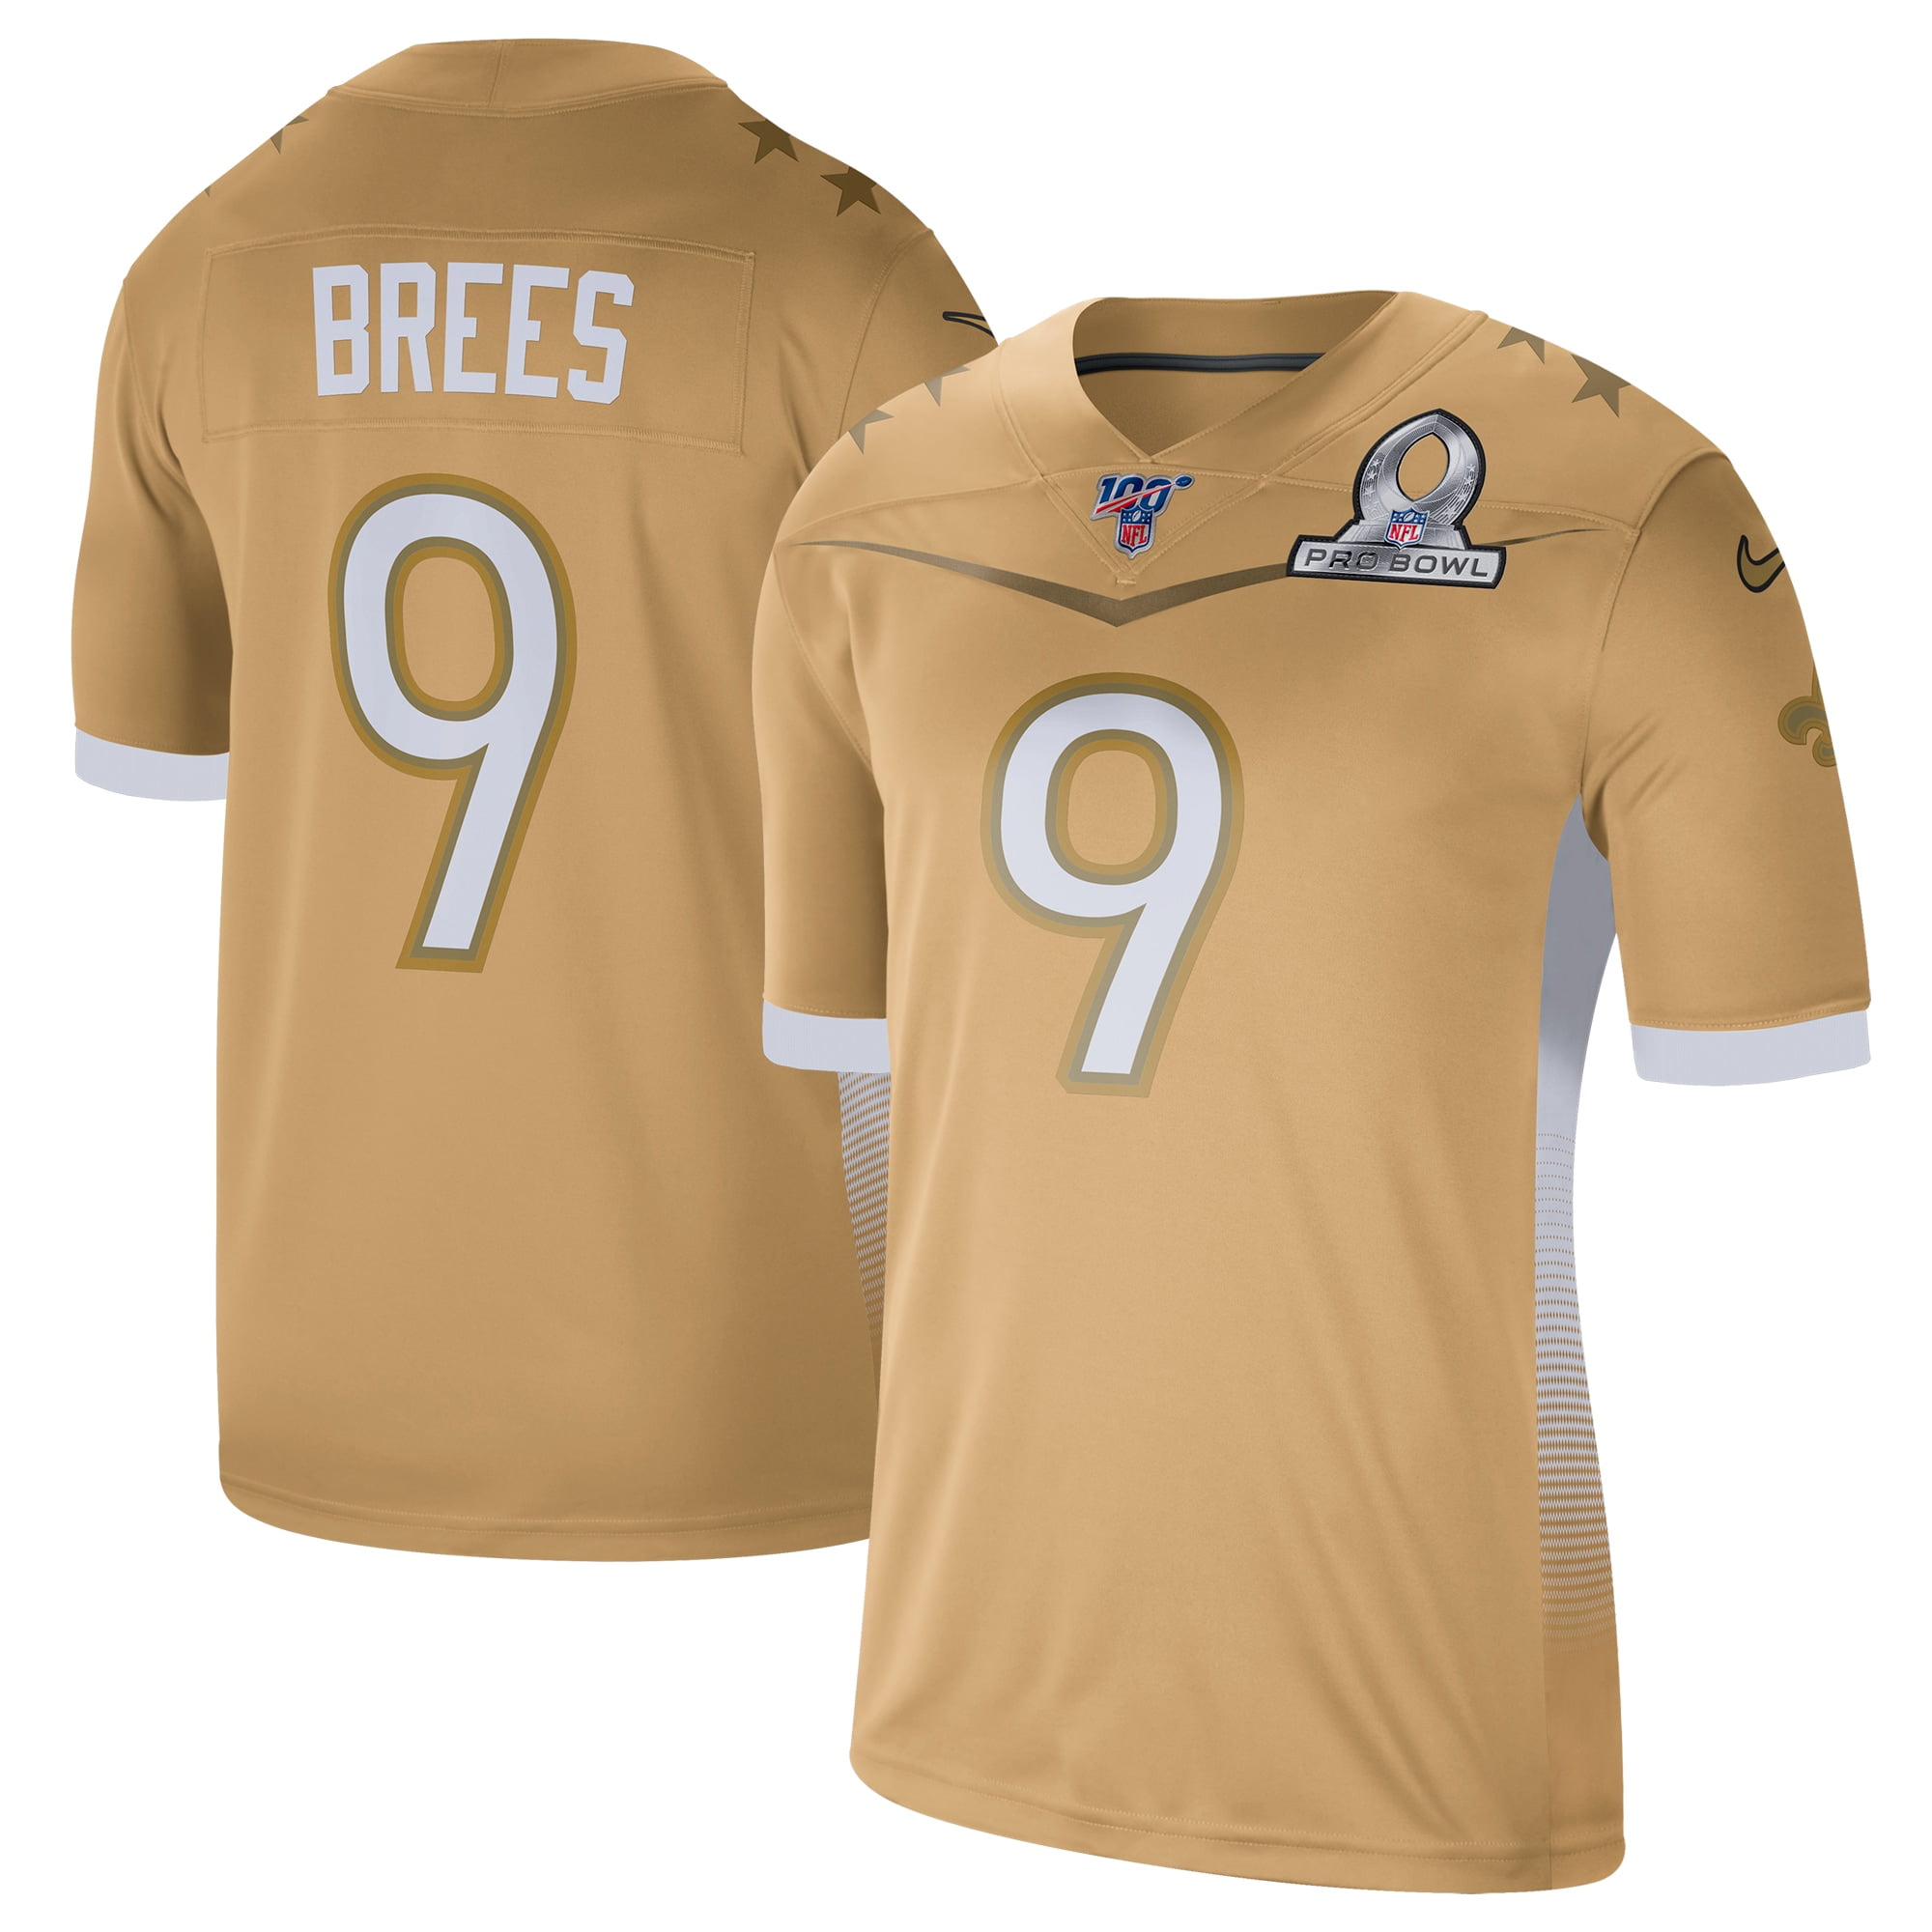 gold drew brees jersey